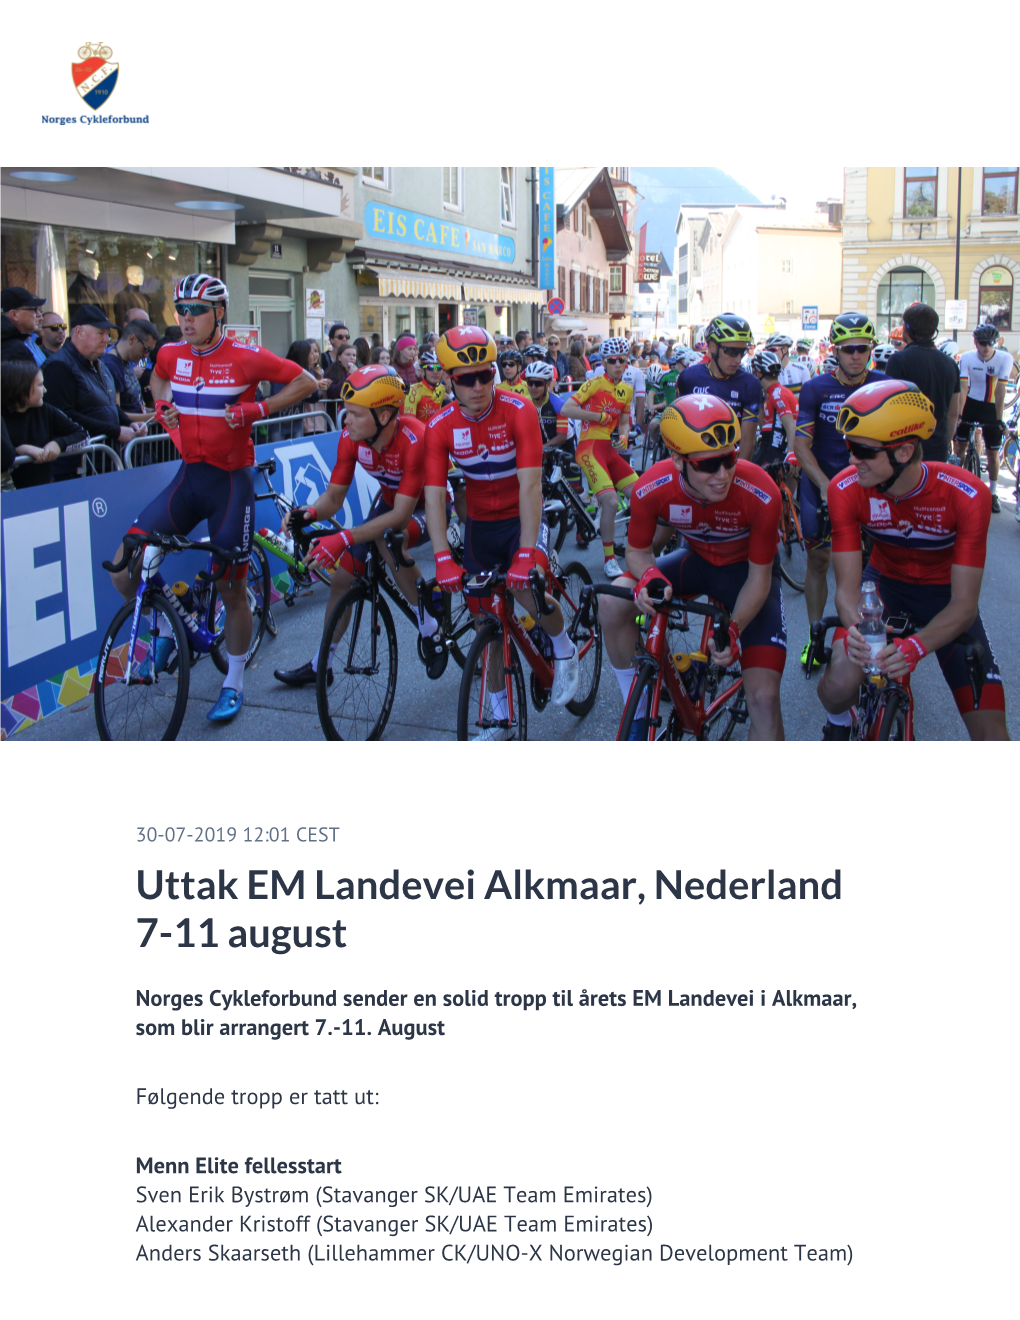 Uttak EM Landevei Alkmaar, Nederland 7-11 August